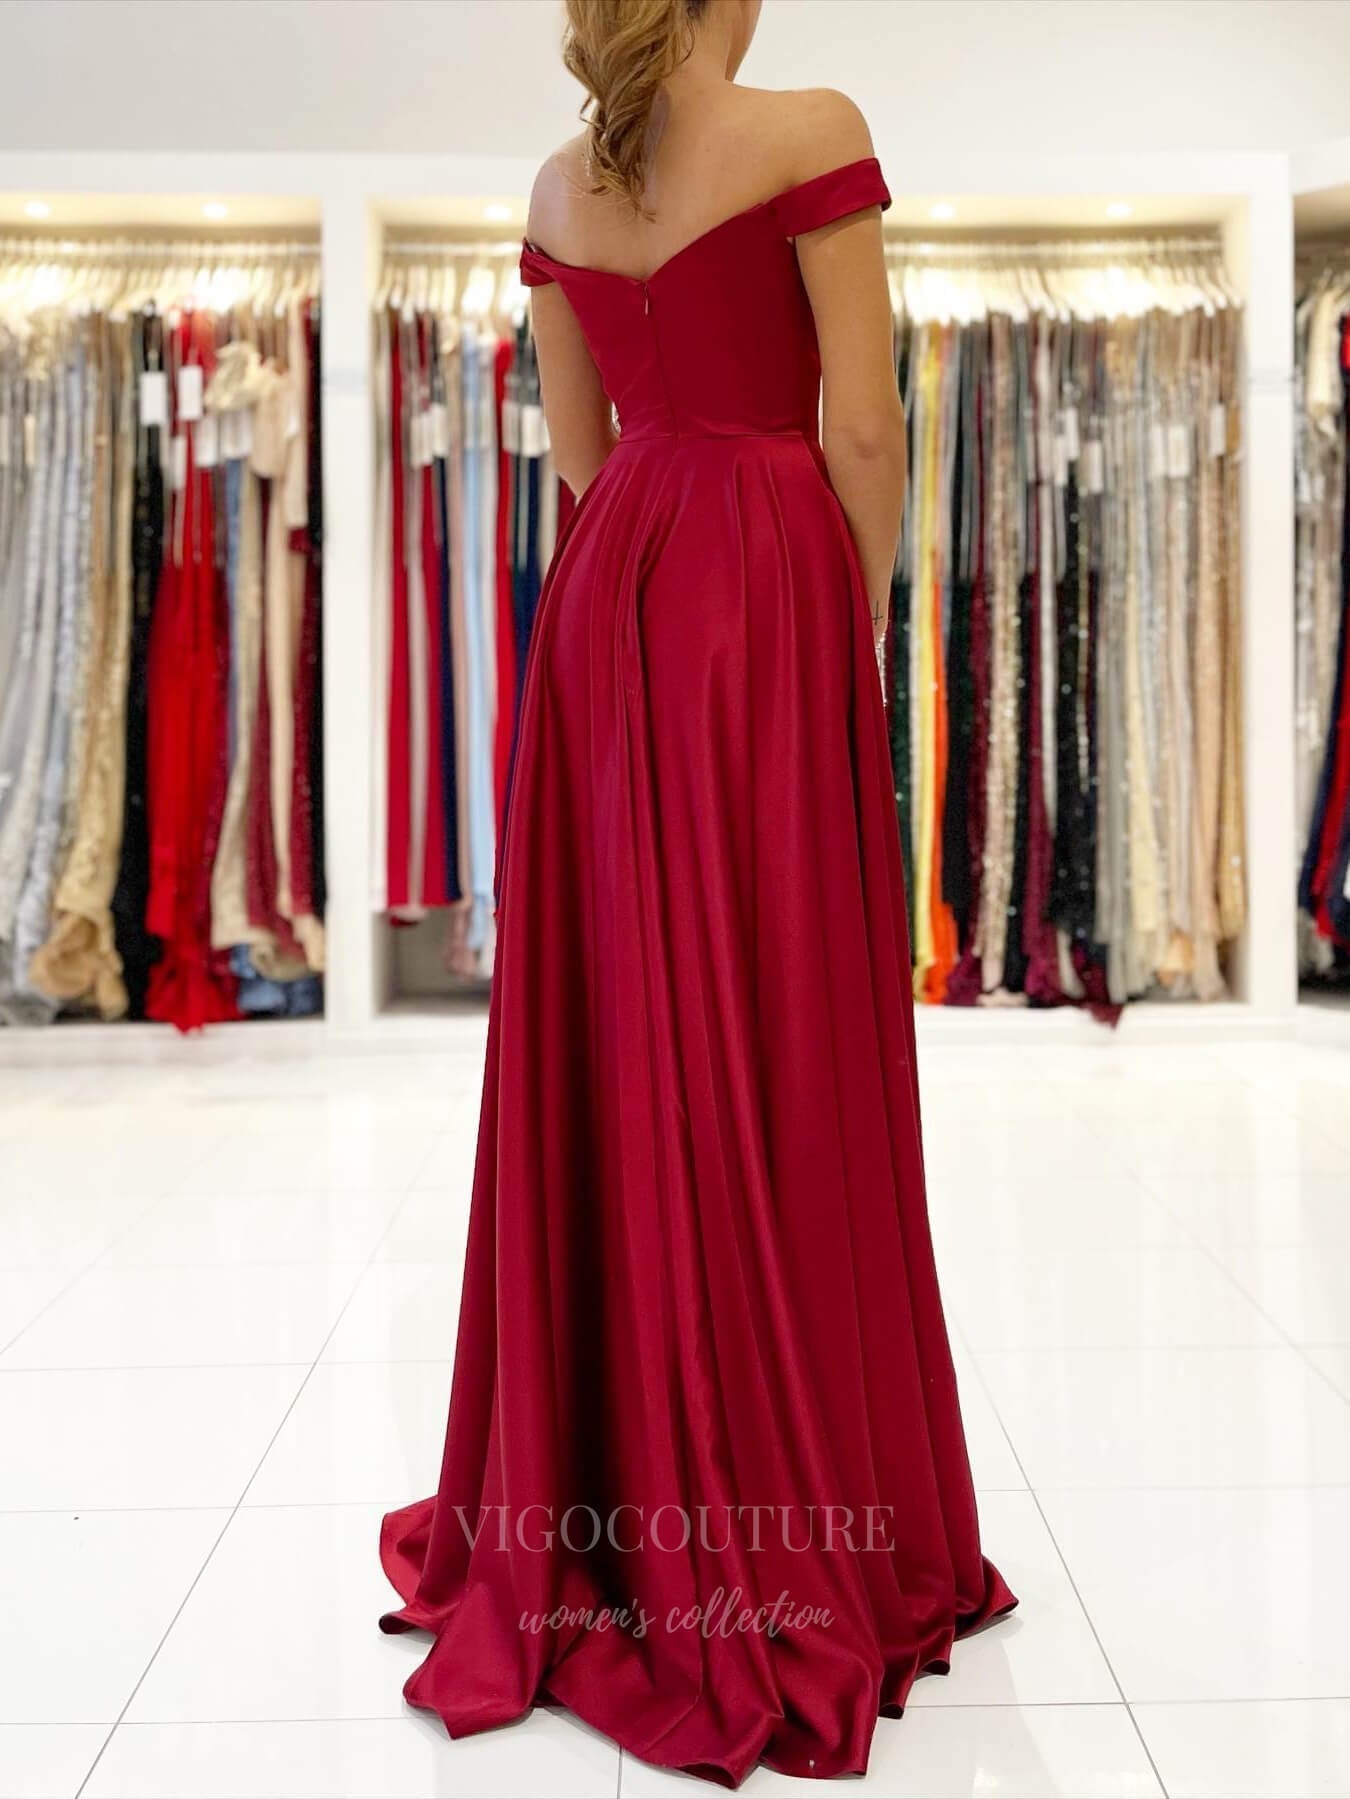 vigocouture-Red Satin Off the Shoulder Prom Dress 20947-Prom Dresses-vigocouture-